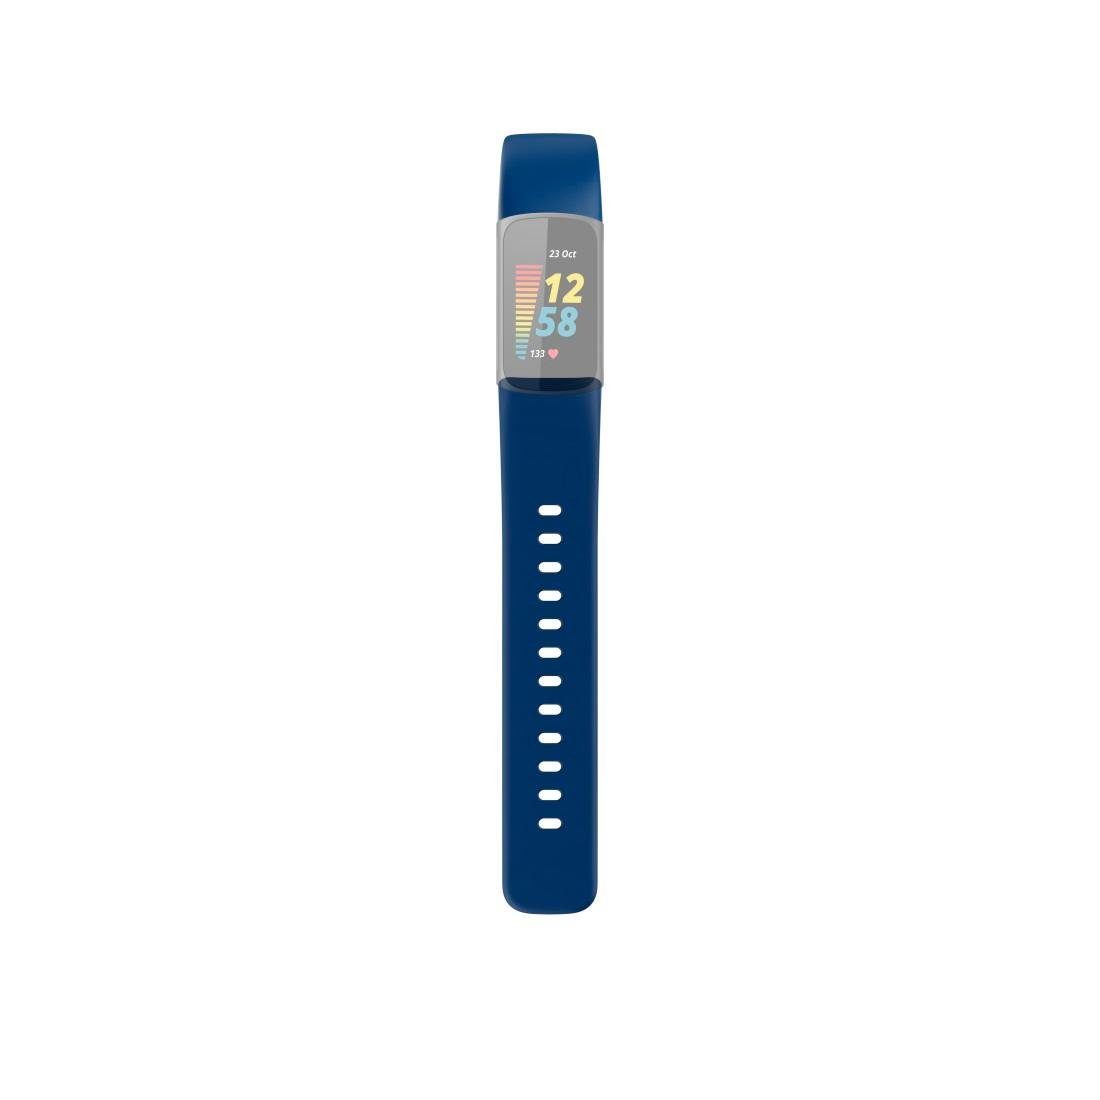 Hama Smartwatch-Armband Uhrenarmband 5, Charge dunkelblau universal Tauschen, Armband Fitbit für zum